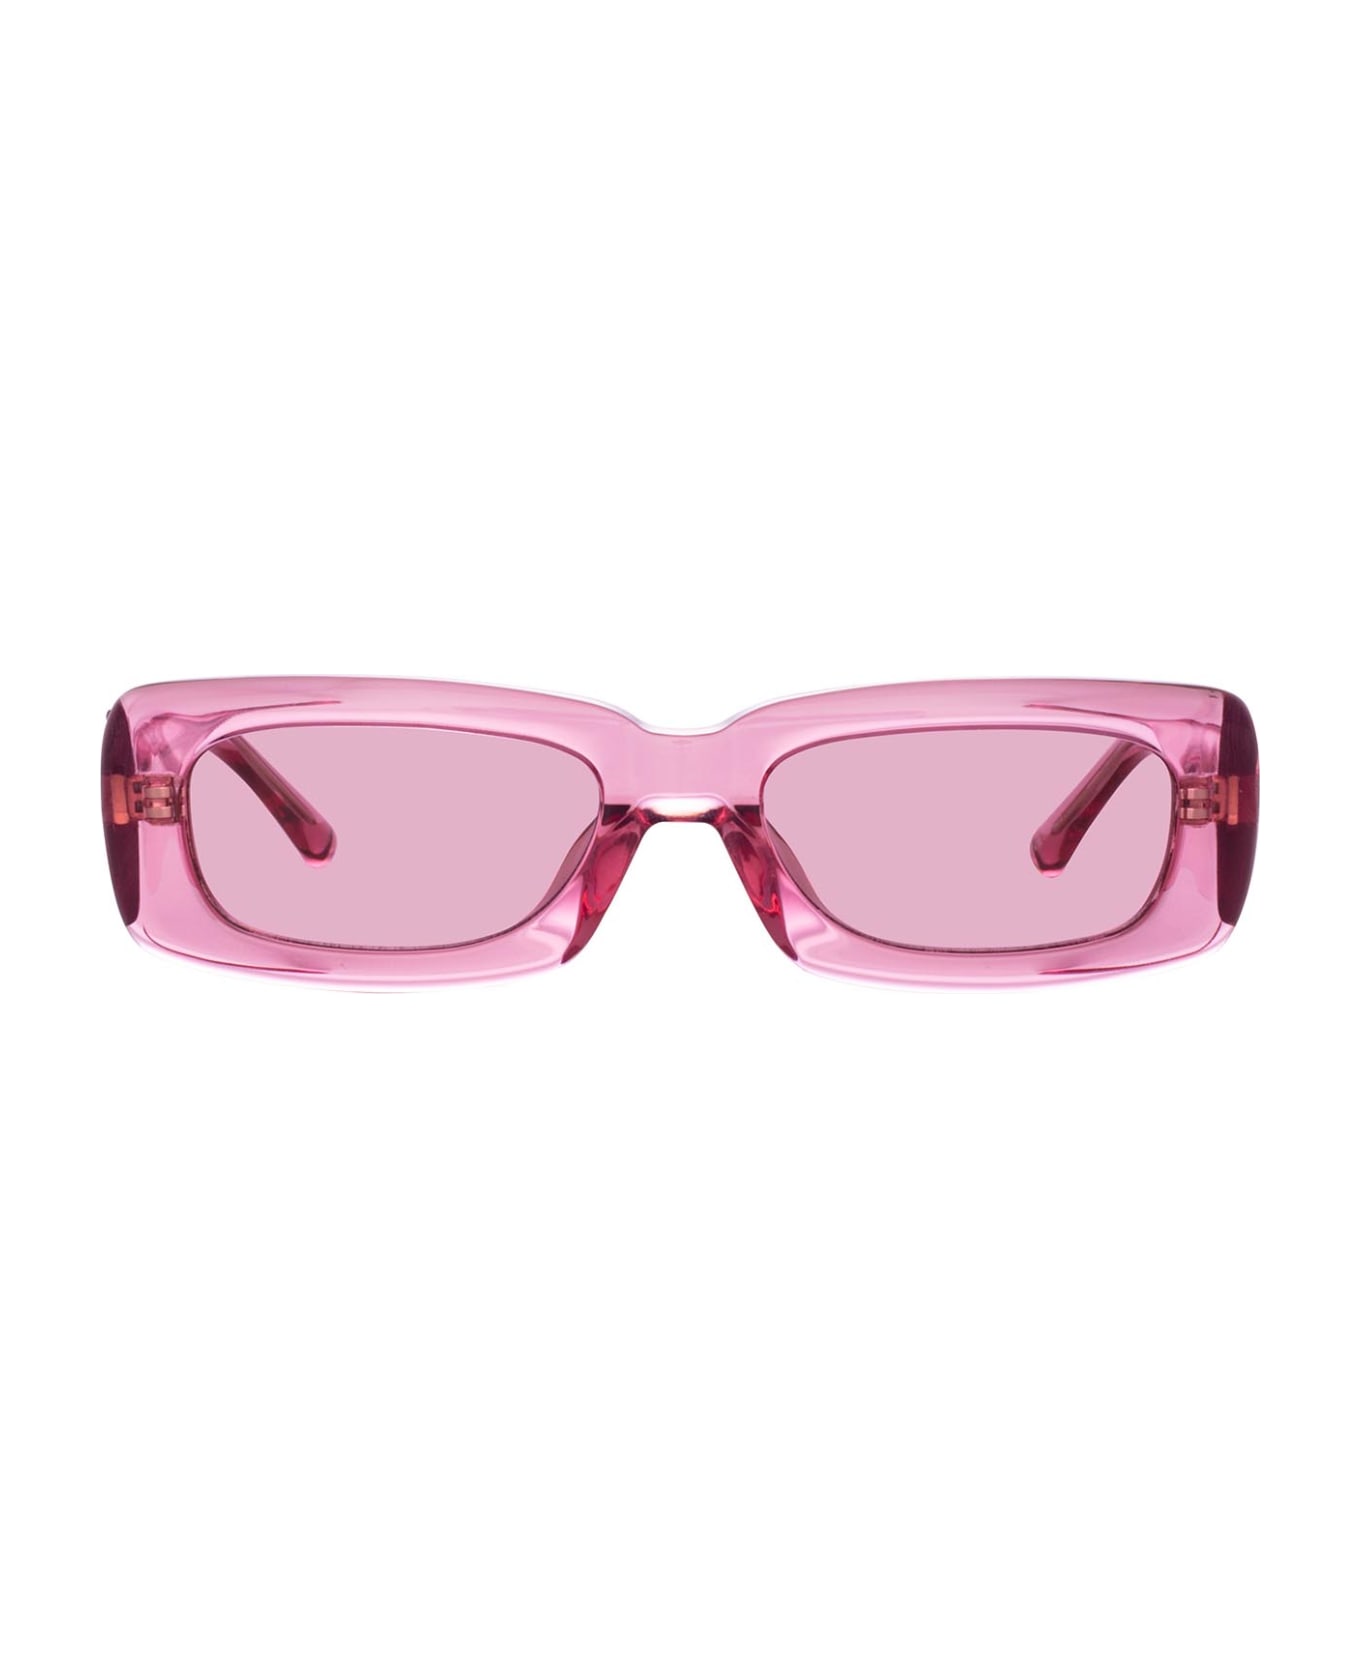 Linda Farrow Attico16 Powder Pink / Silver Sunglasses - Powder Pink / Silver